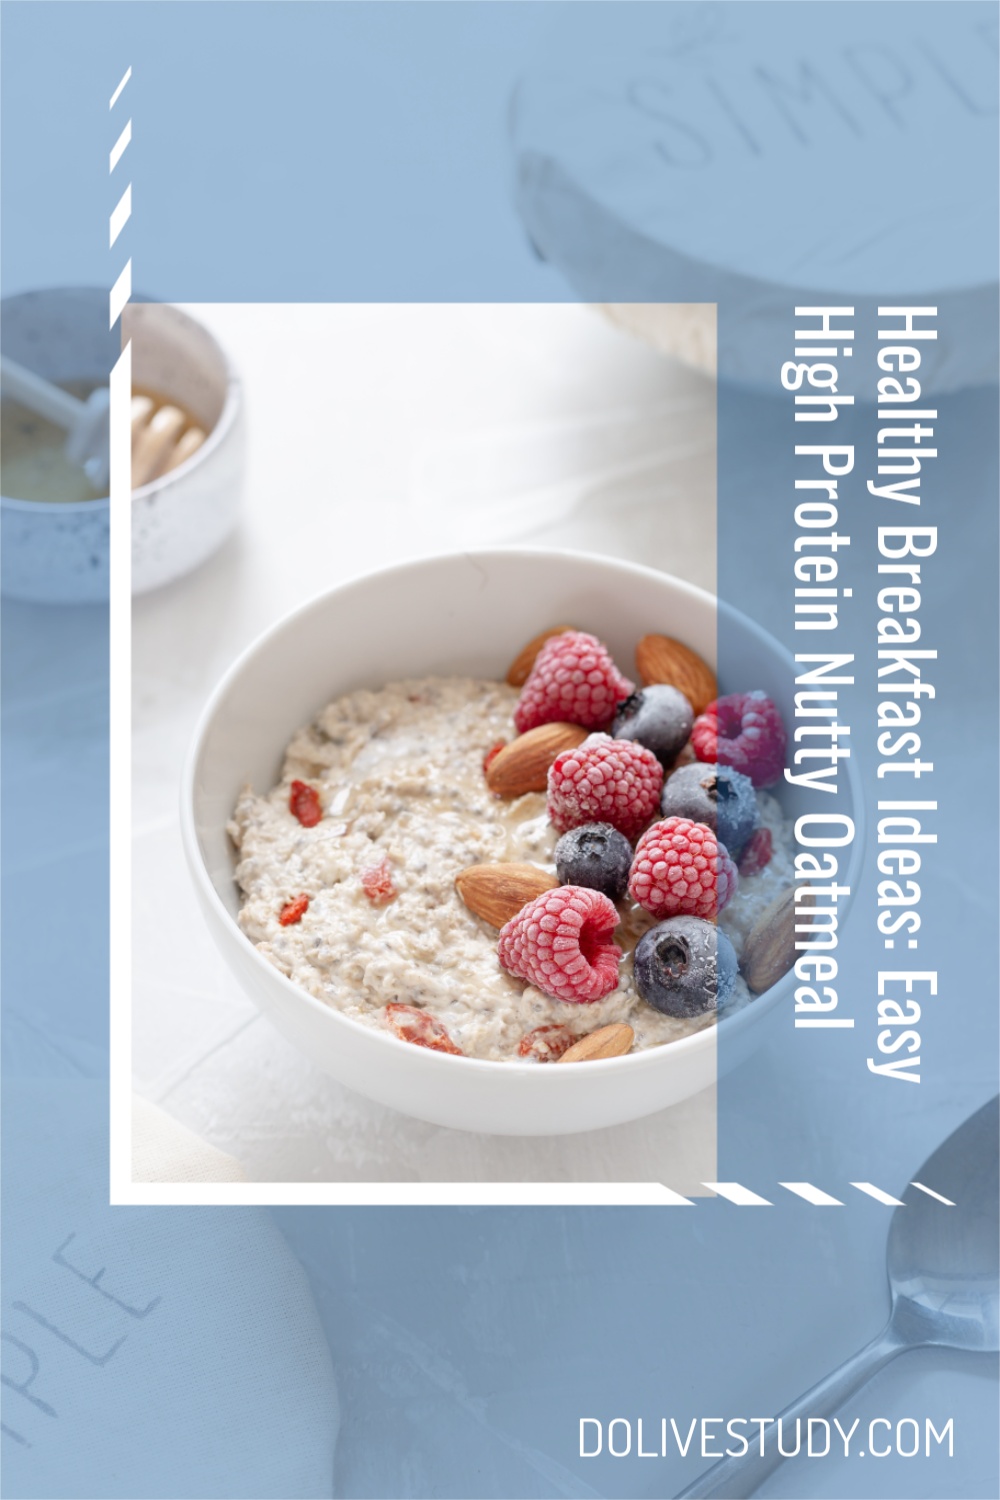 Healthy Breakfast Ideas  Easy High Protein Nutty Oatmeal2 - Healthy Breakfast Ideas: Easy High Protein Nutty Oatmeal